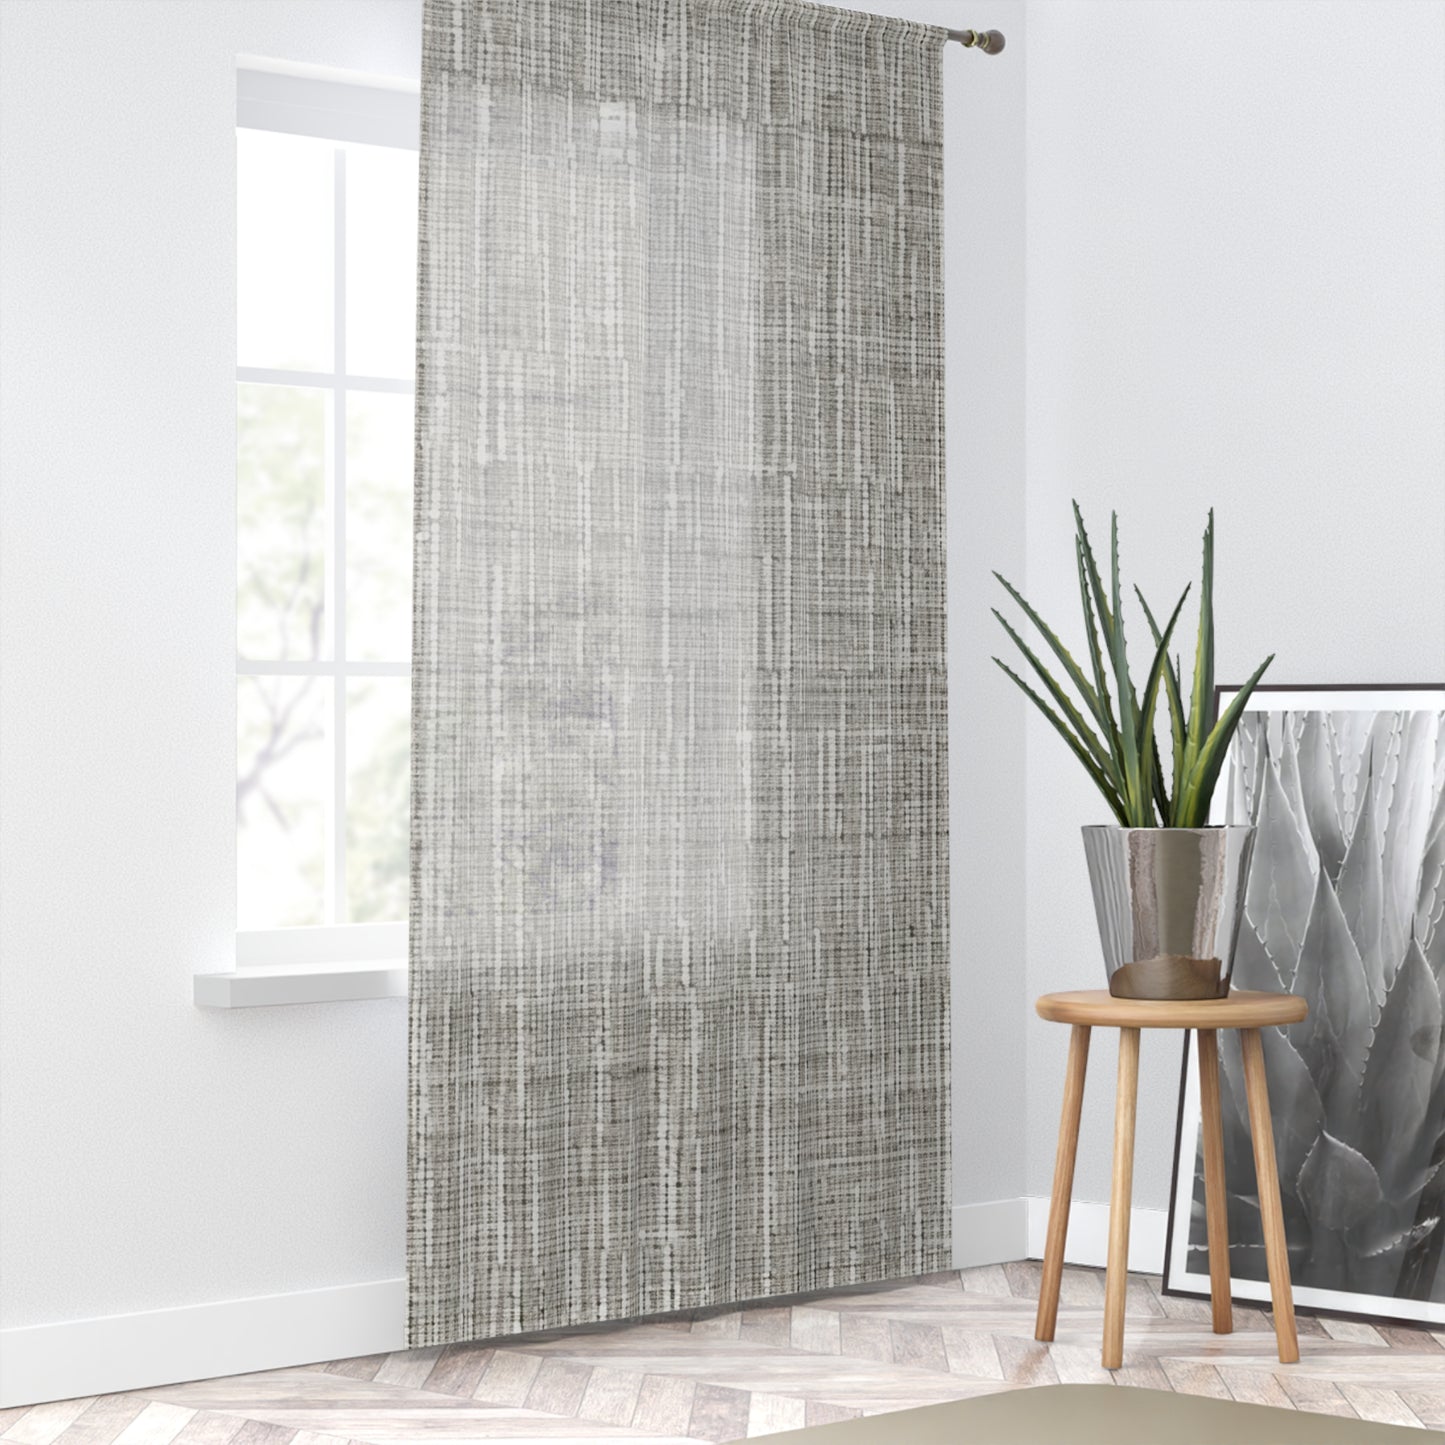 Silver Grey: Denim-Inspired, Contemporary Fabric Design - Window Curtain